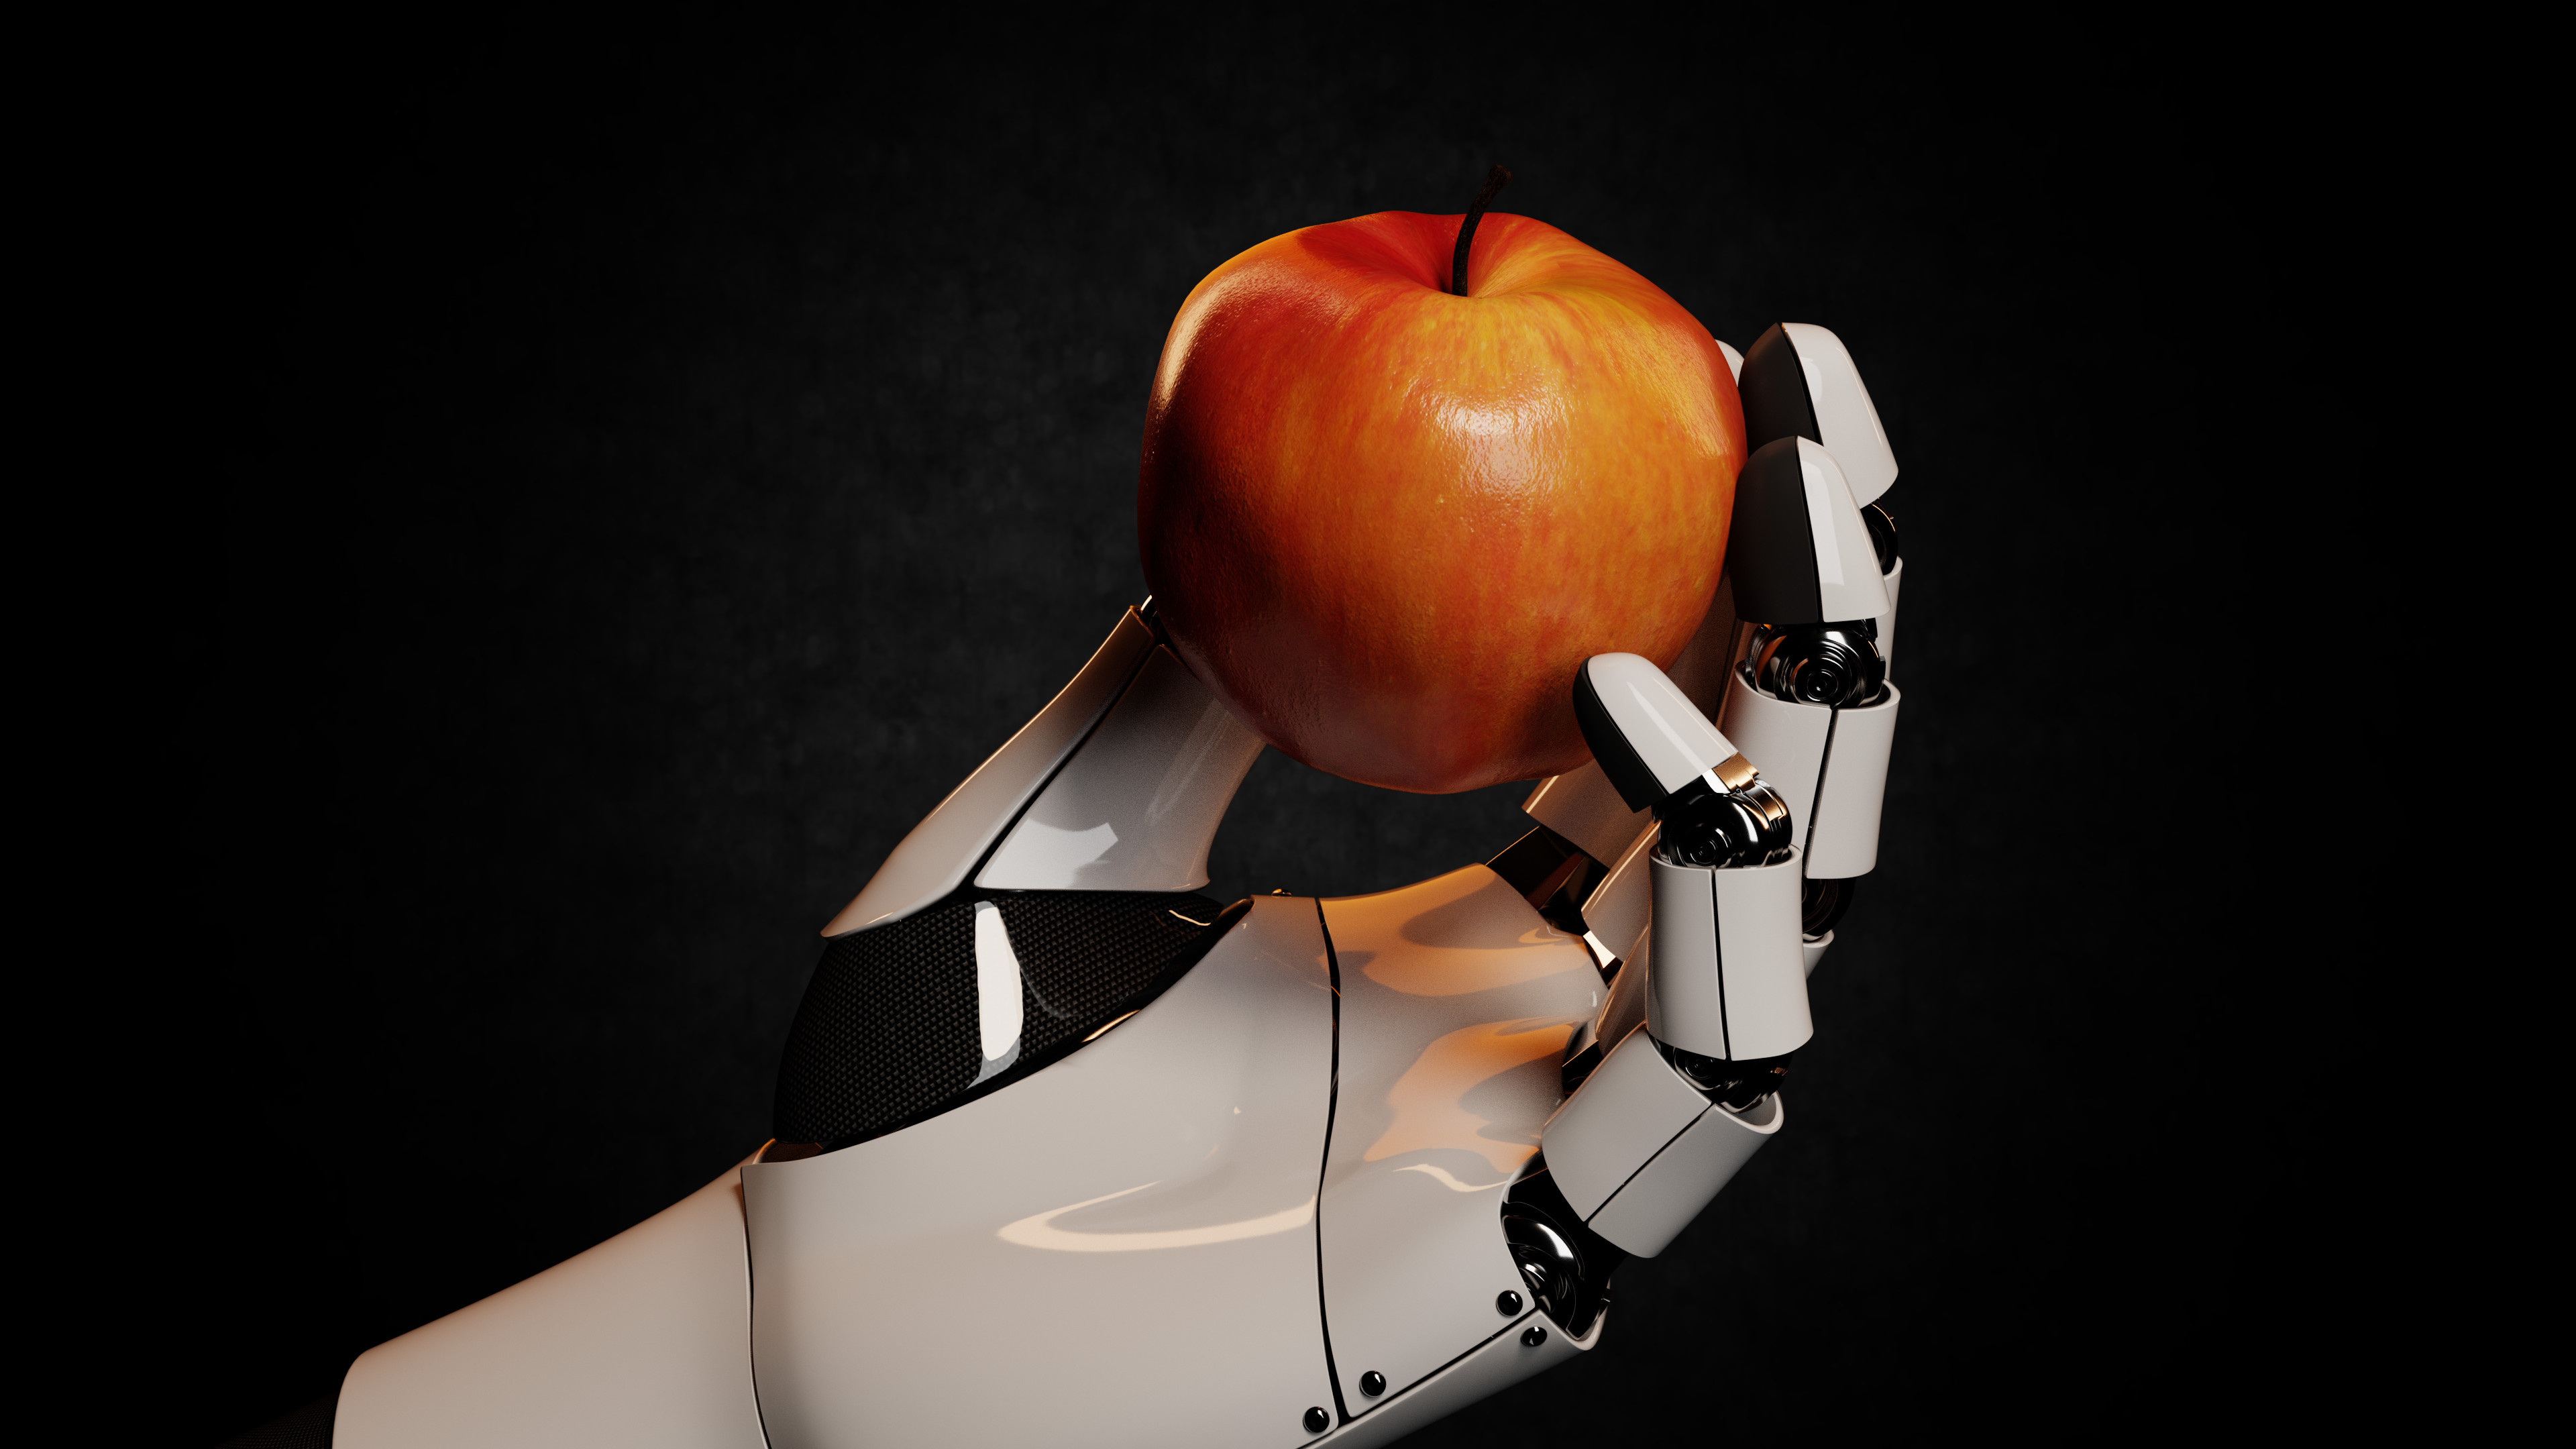 Robot: Bionic hand, Intuitive life-like precision, Intuitive artificial limbs. 3840x2160 4K Wallpaper.